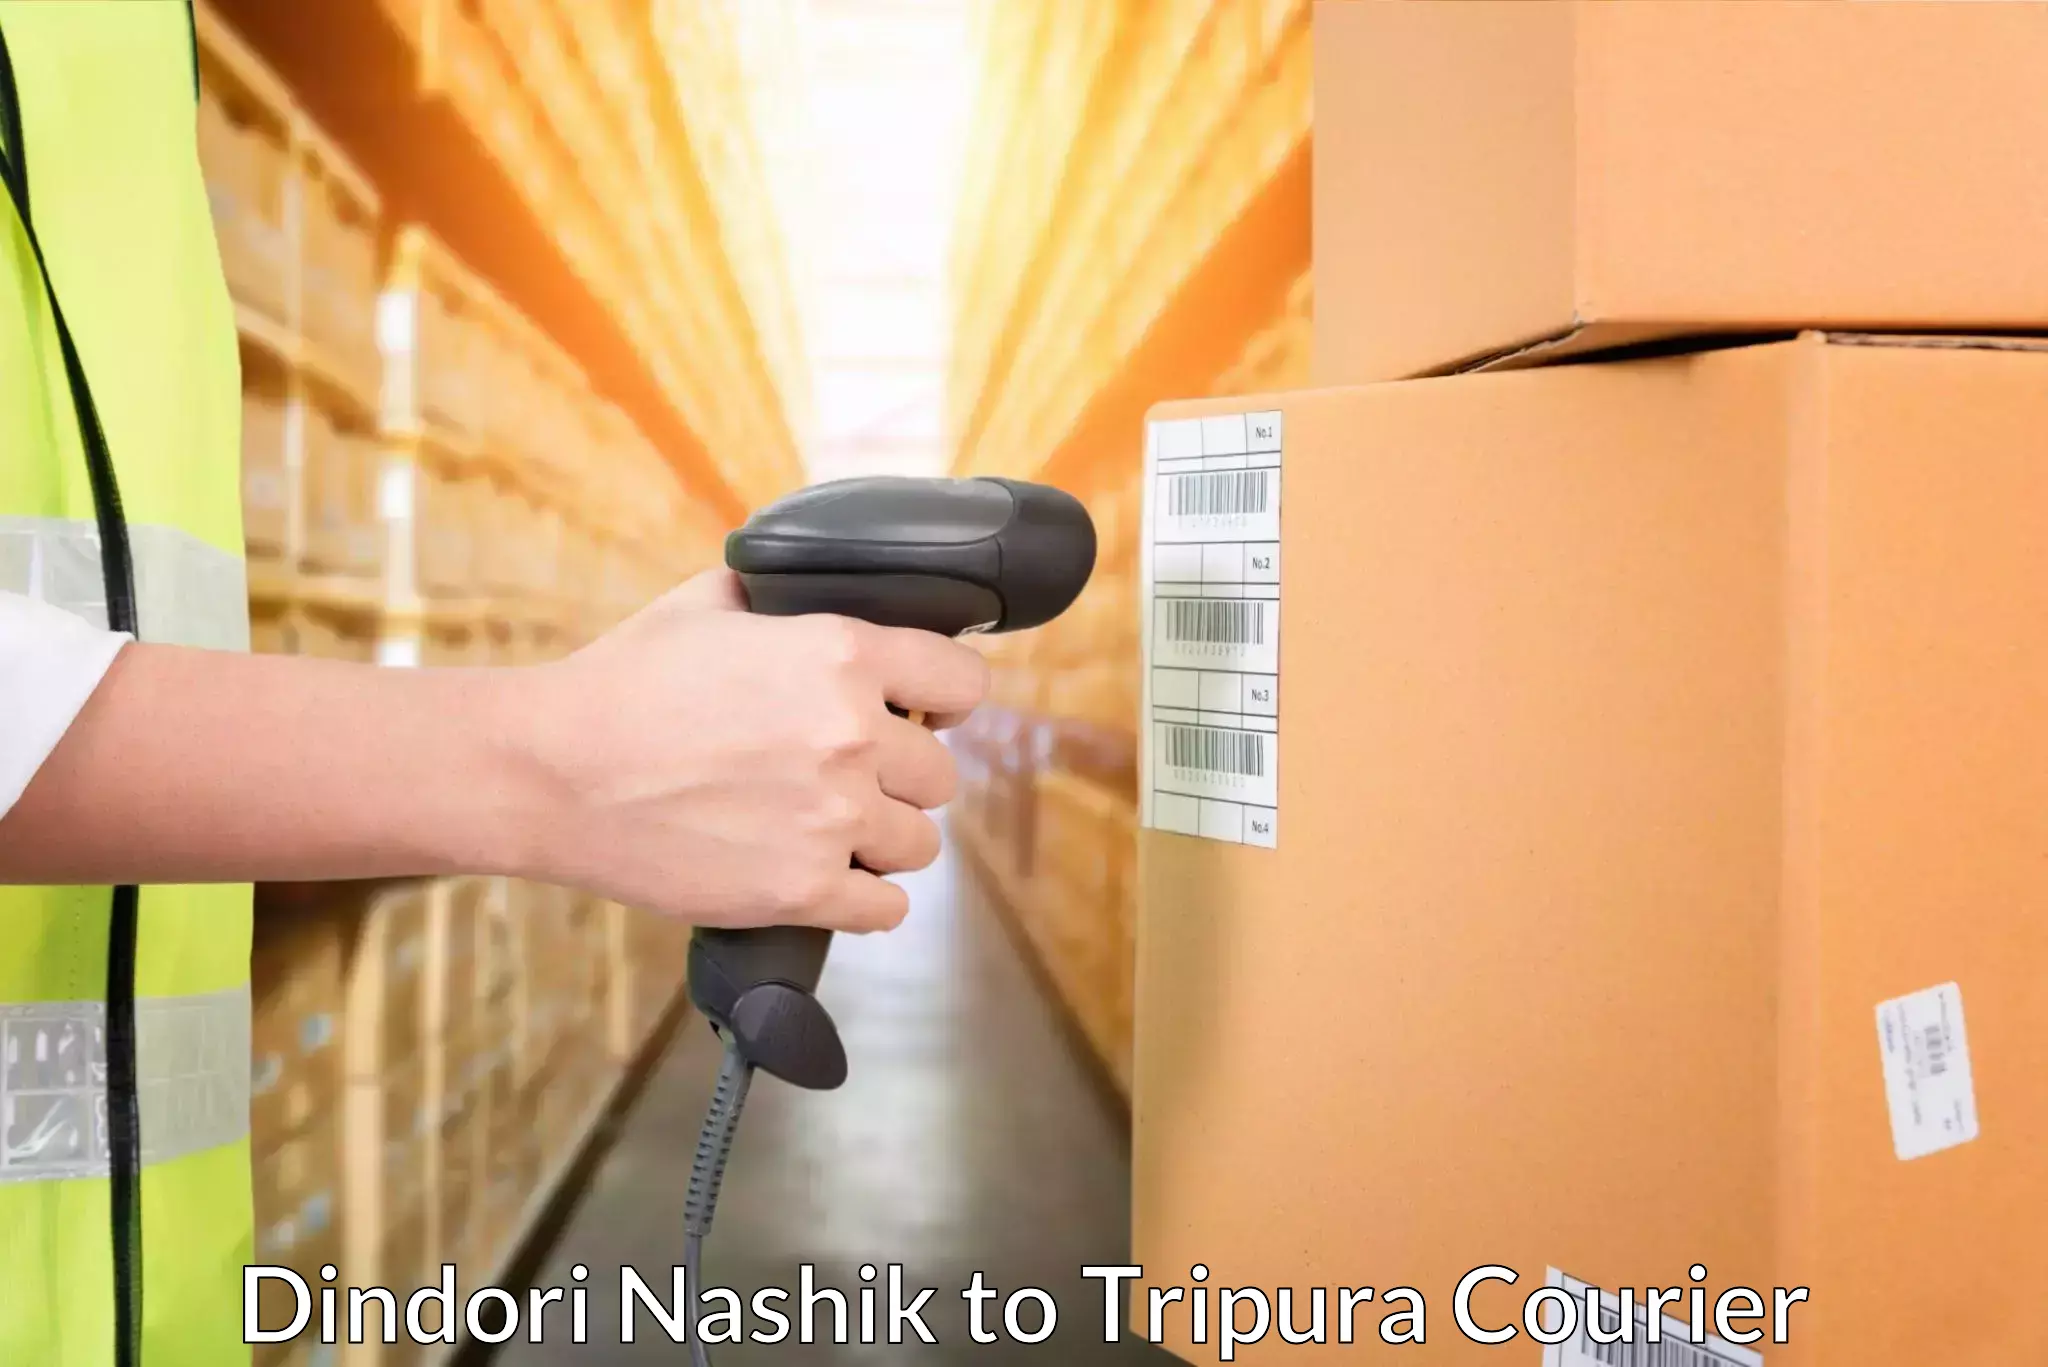 Express delivery capabilities Dindori Nashik to Tripura